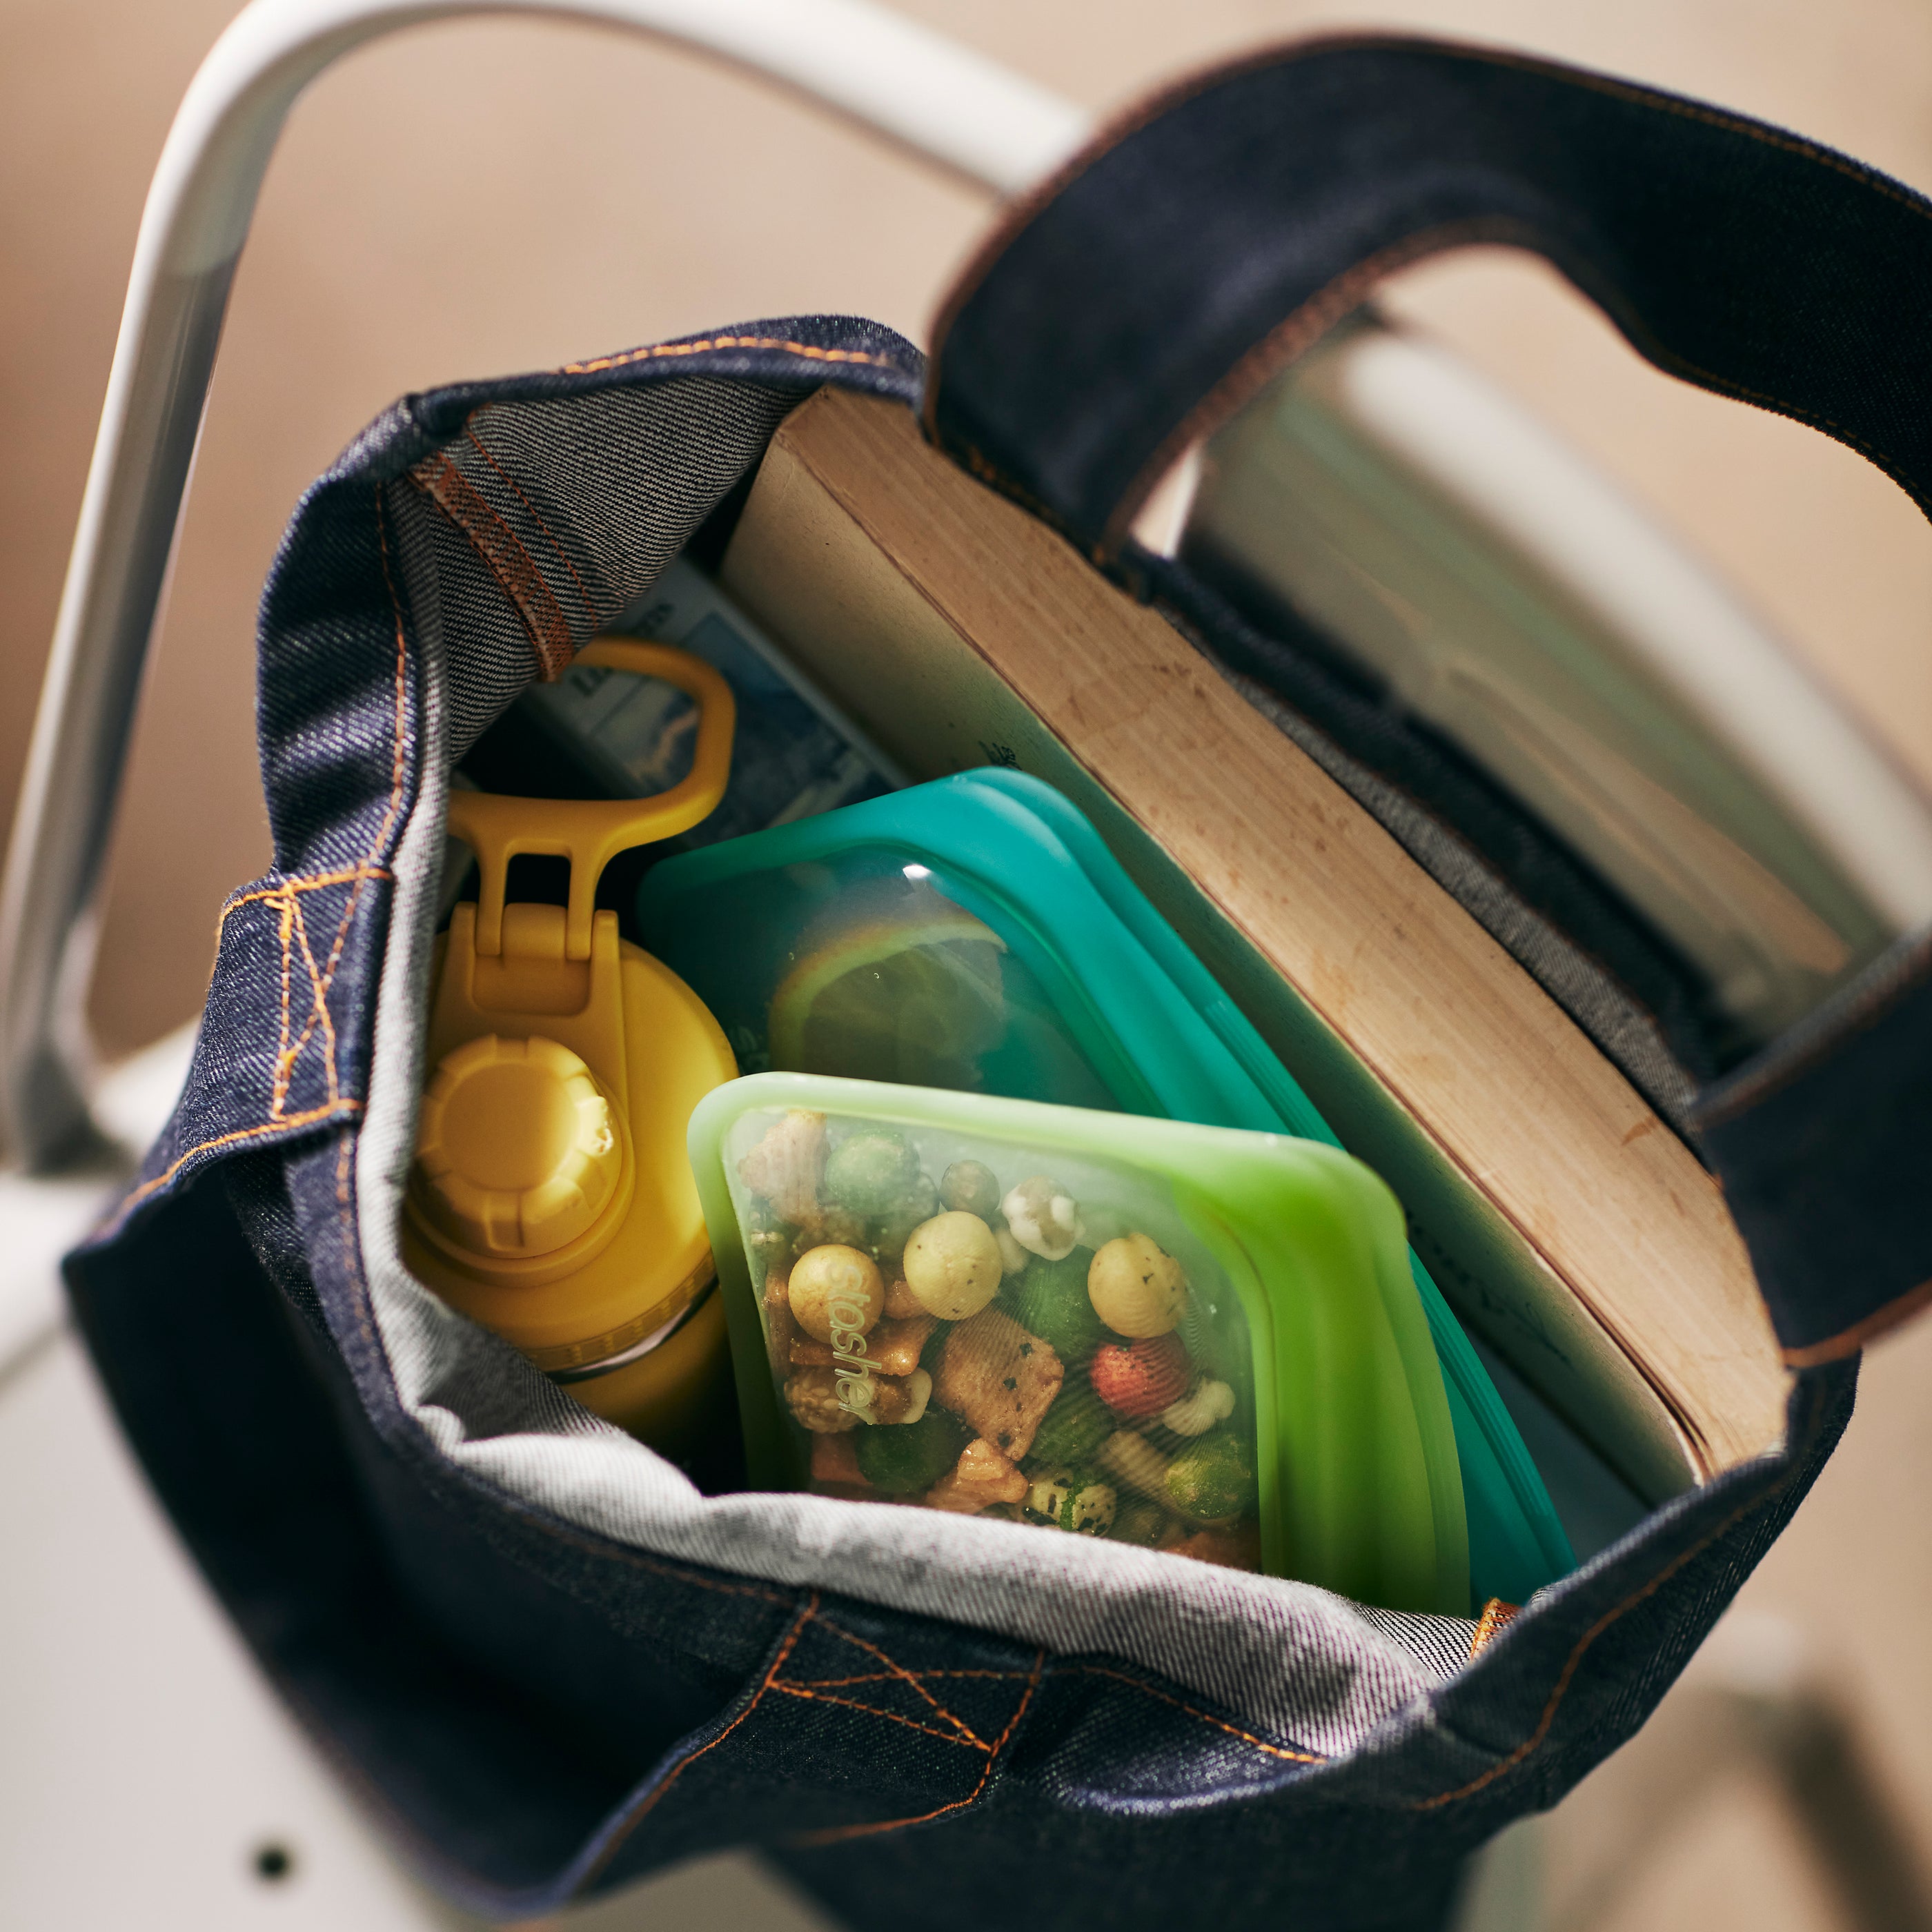 Leak-free snack bags to bring to school